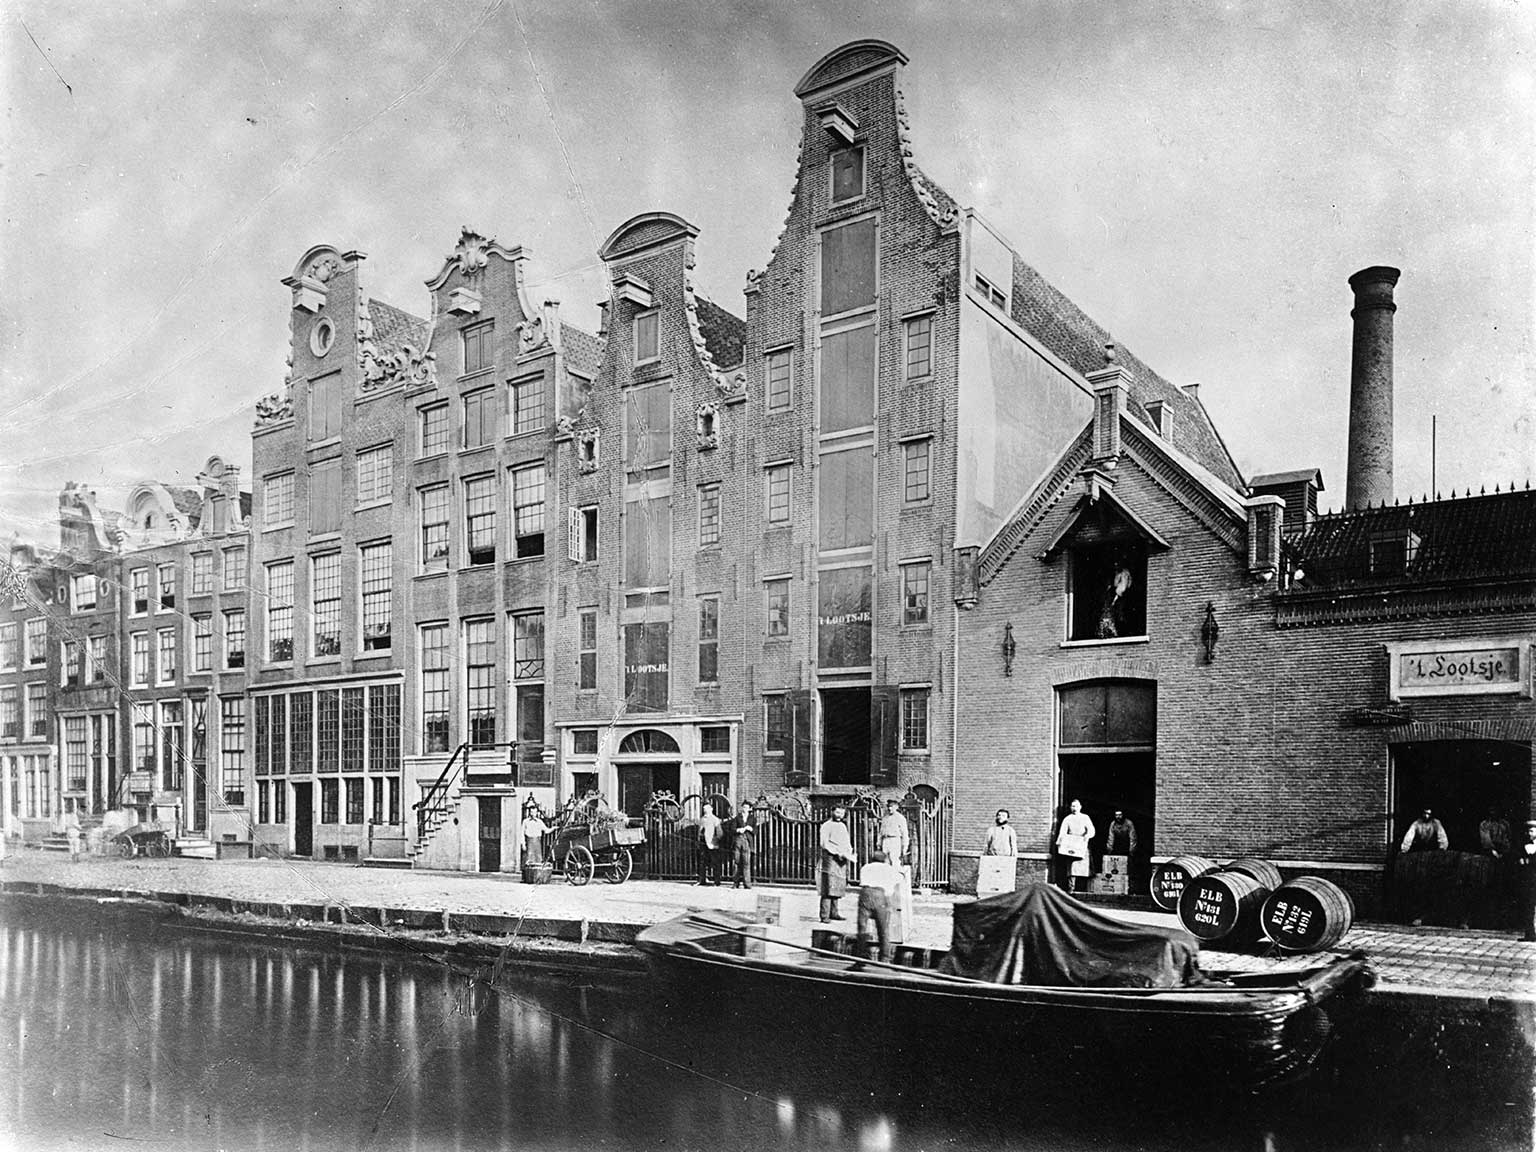 Rozengracht 99-111, Amsterdam, in 1890, buildings belonging to Lucas Bols, Rozengracht not yet filled in